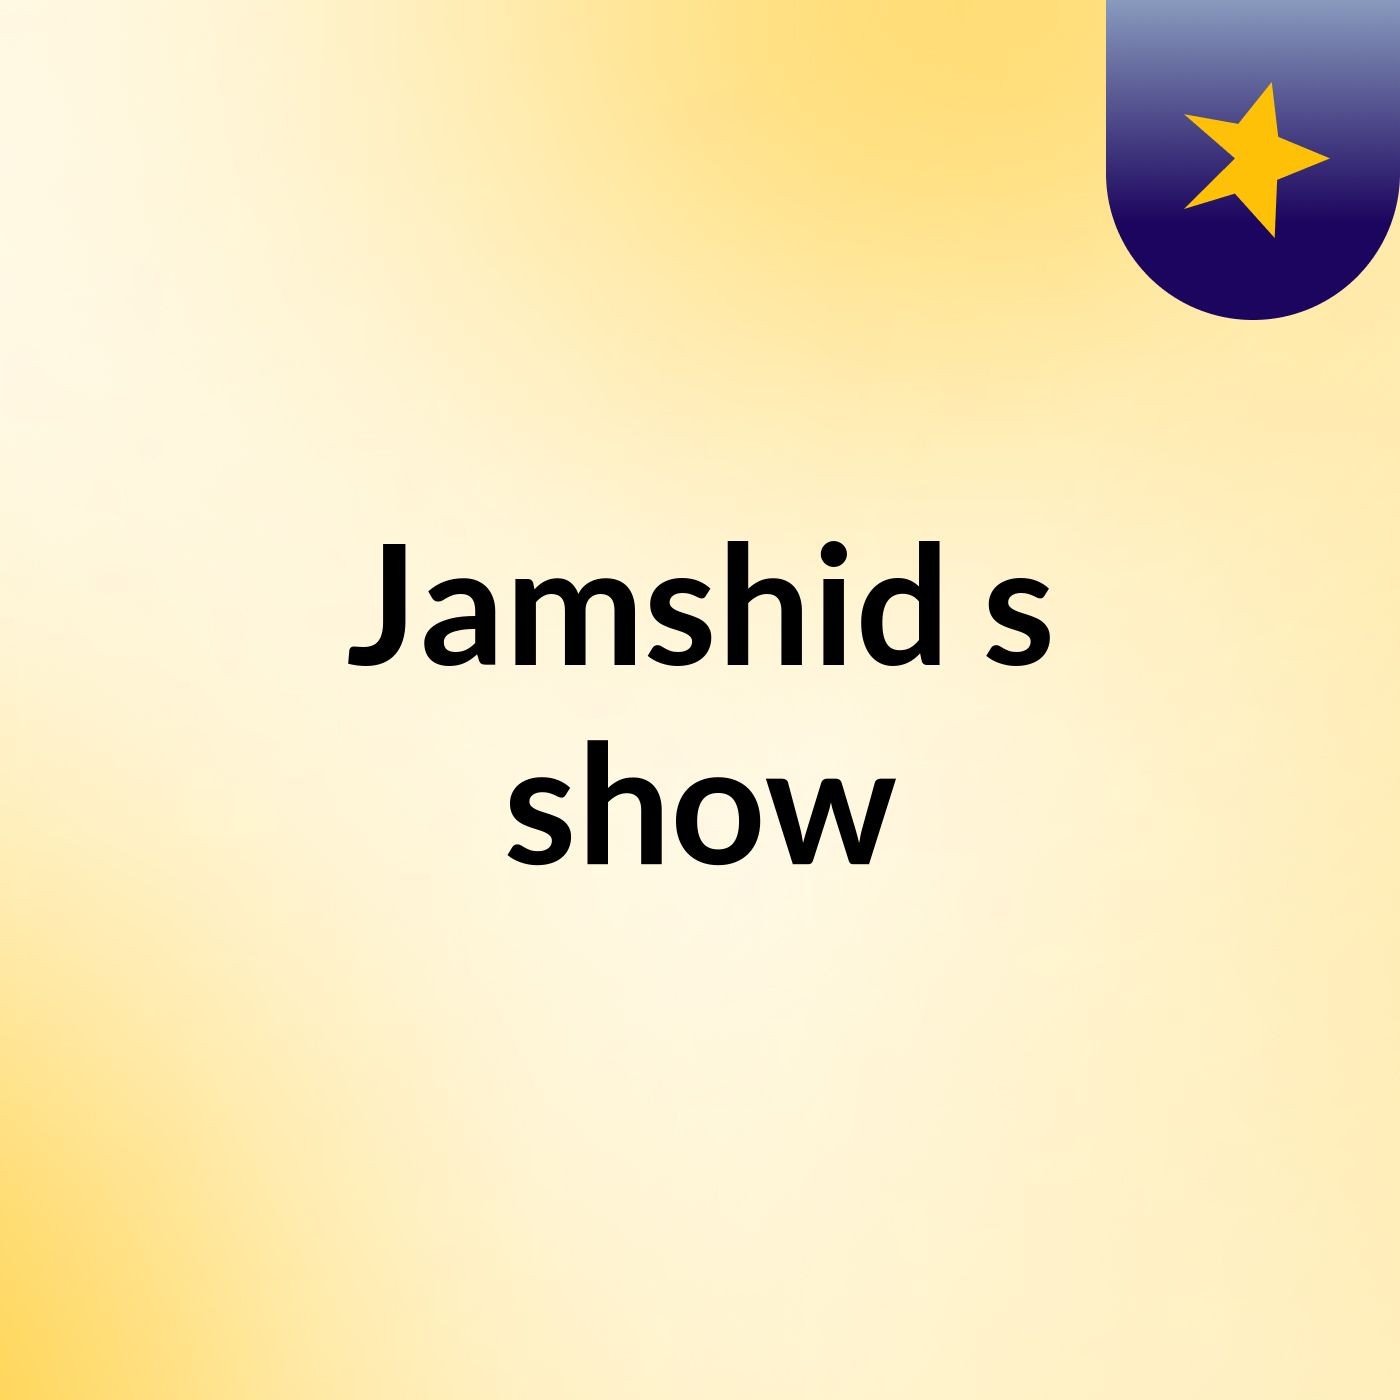 Jamshid's show